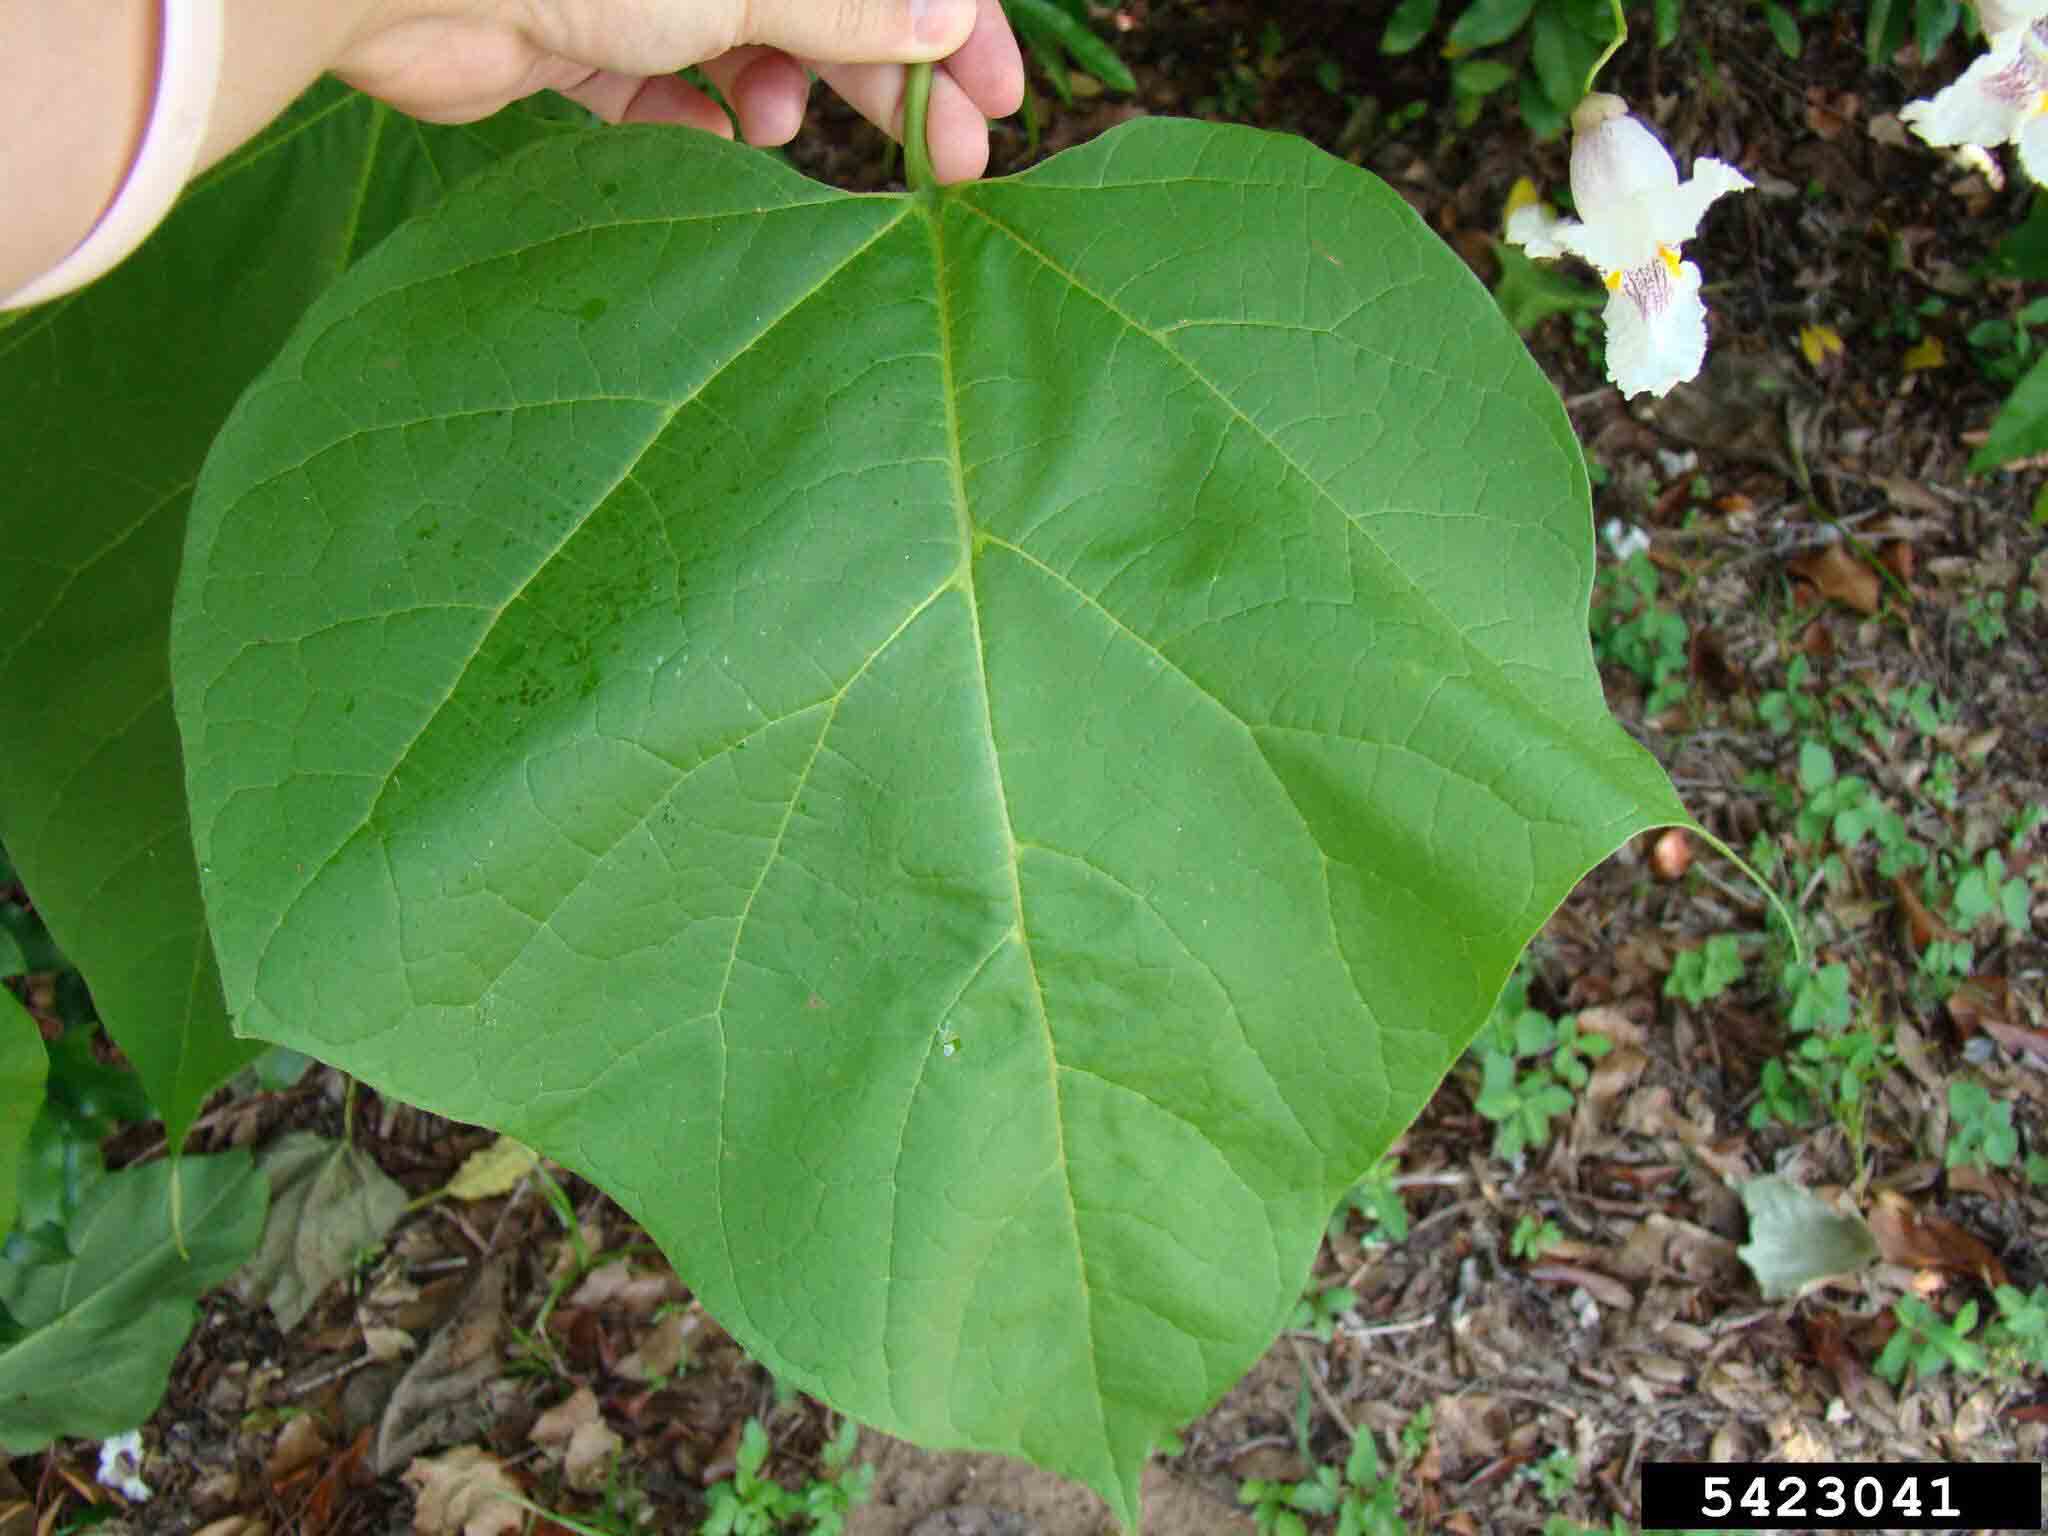 Southern catalpa leaf, upper side